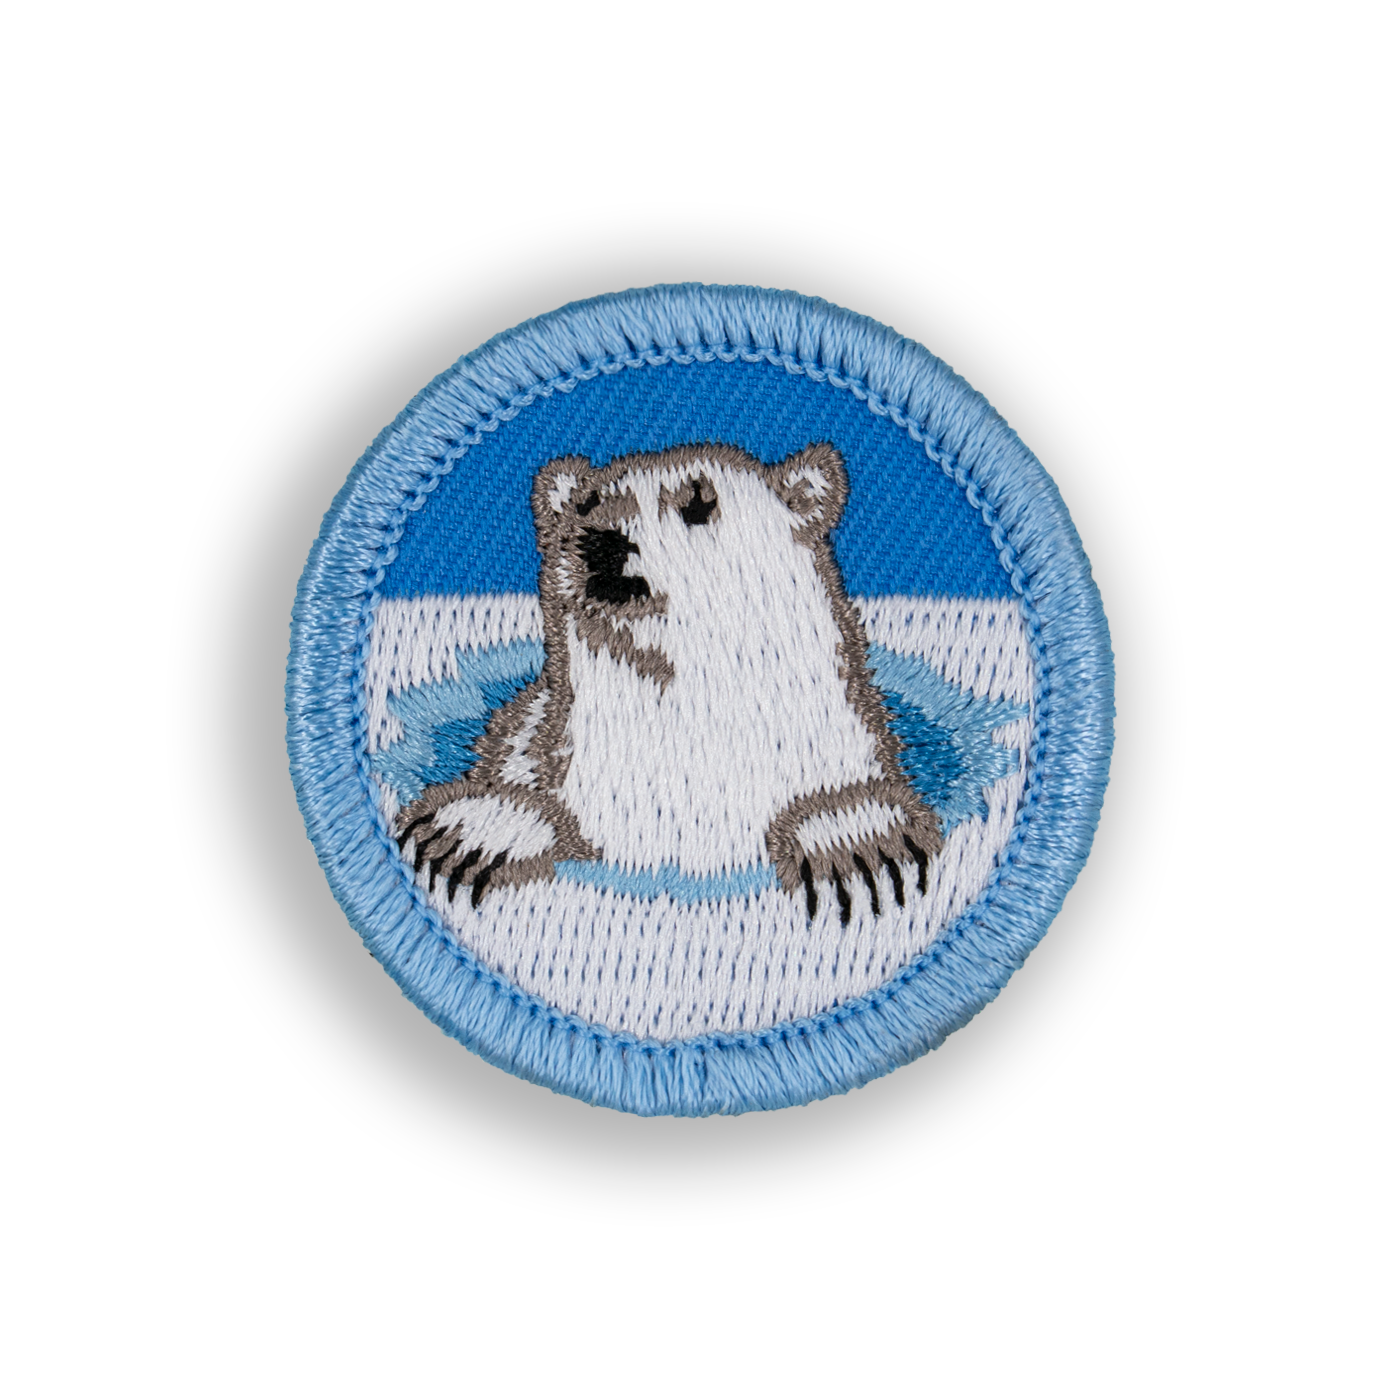 Polar Bear Club Patch | Demerit Wear - Fake Merit Badges